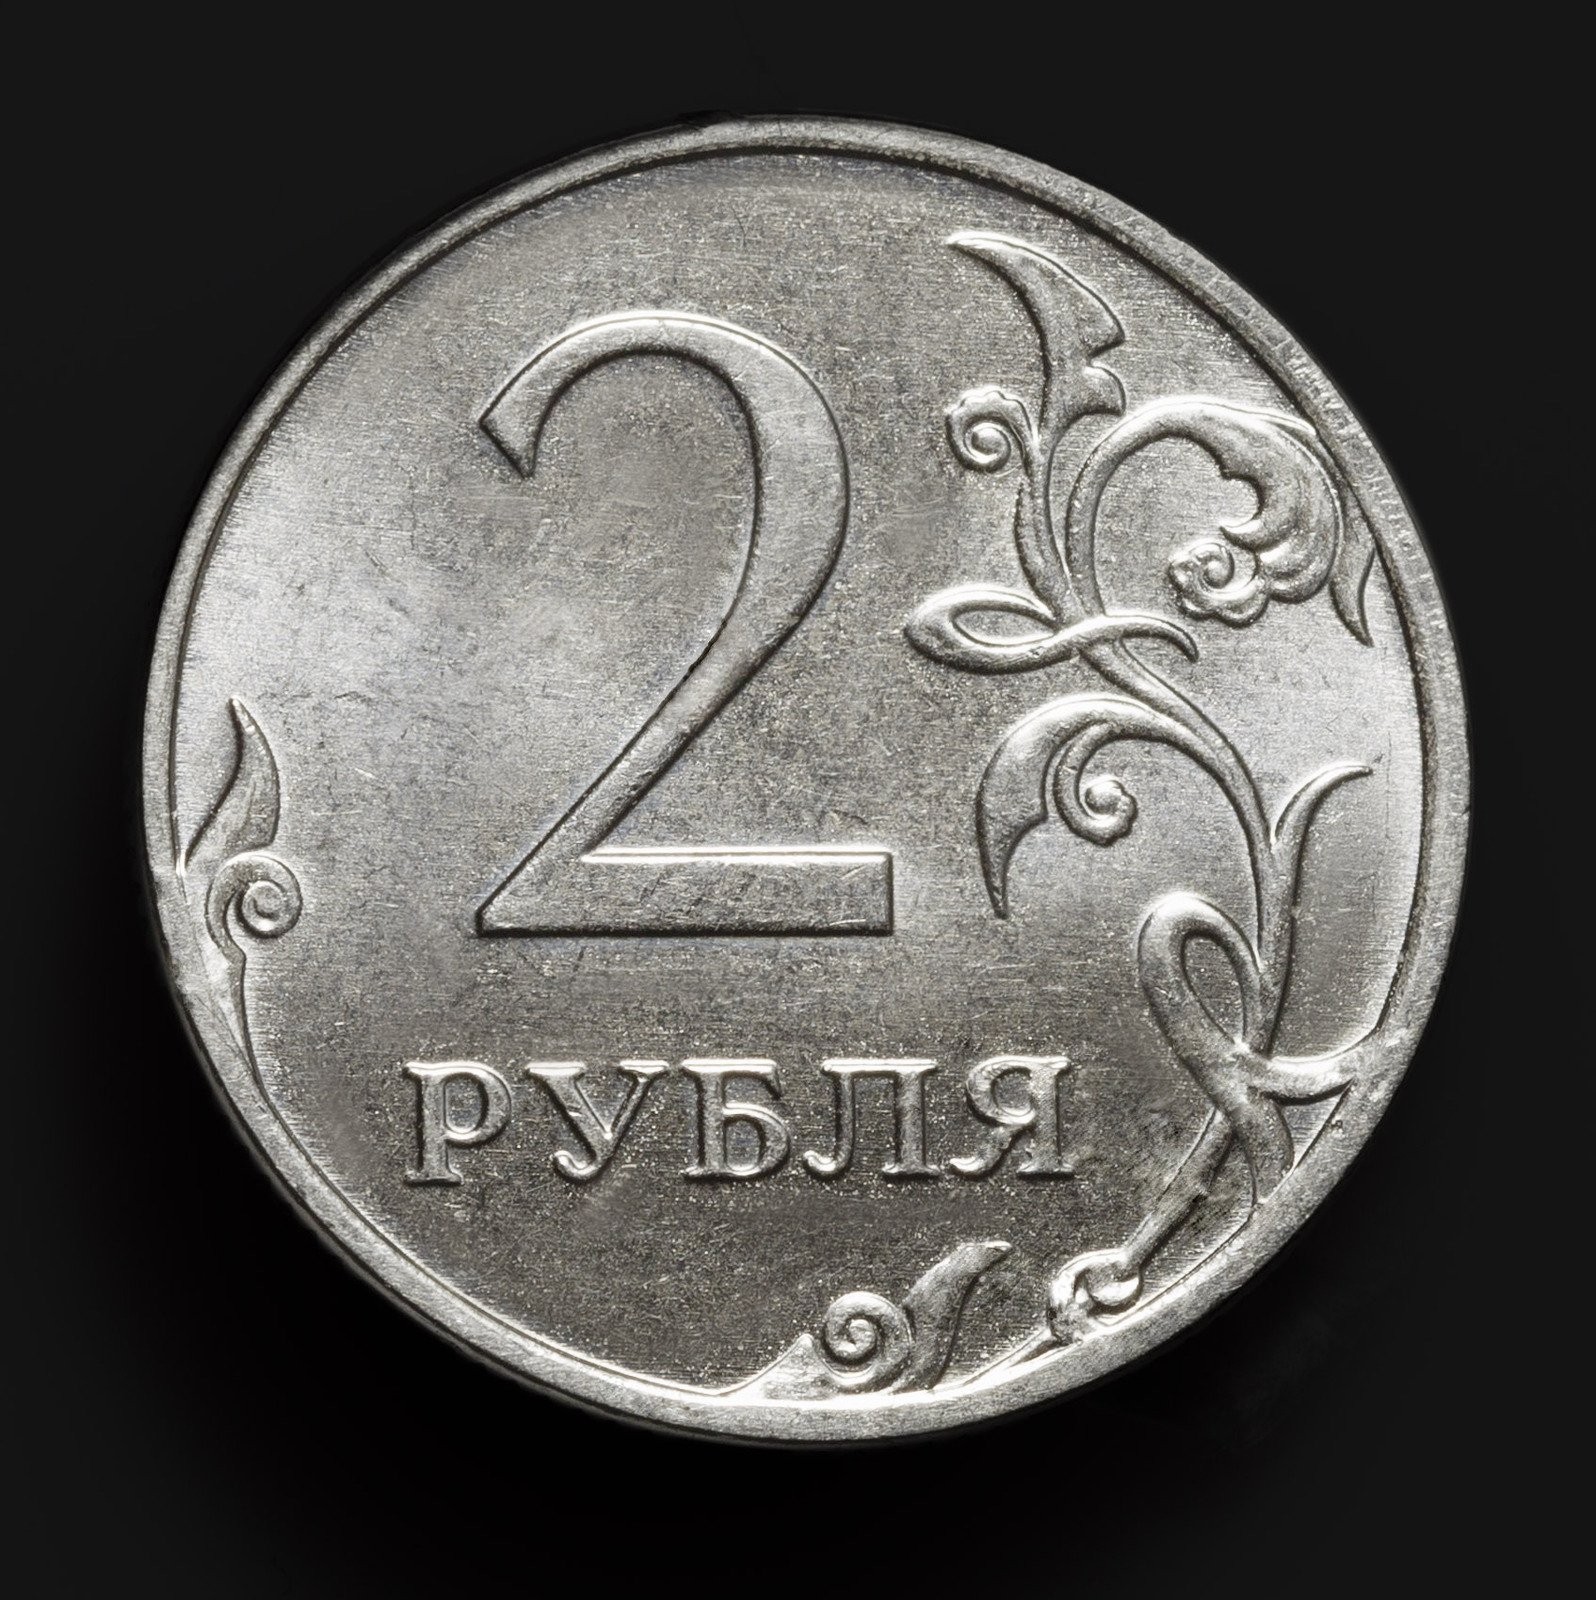 5 рублей зеленые. 2 Рубля. Монета 2 руб. Монета 2 рубля на прозрачном фоне. Монета 5 рублей.